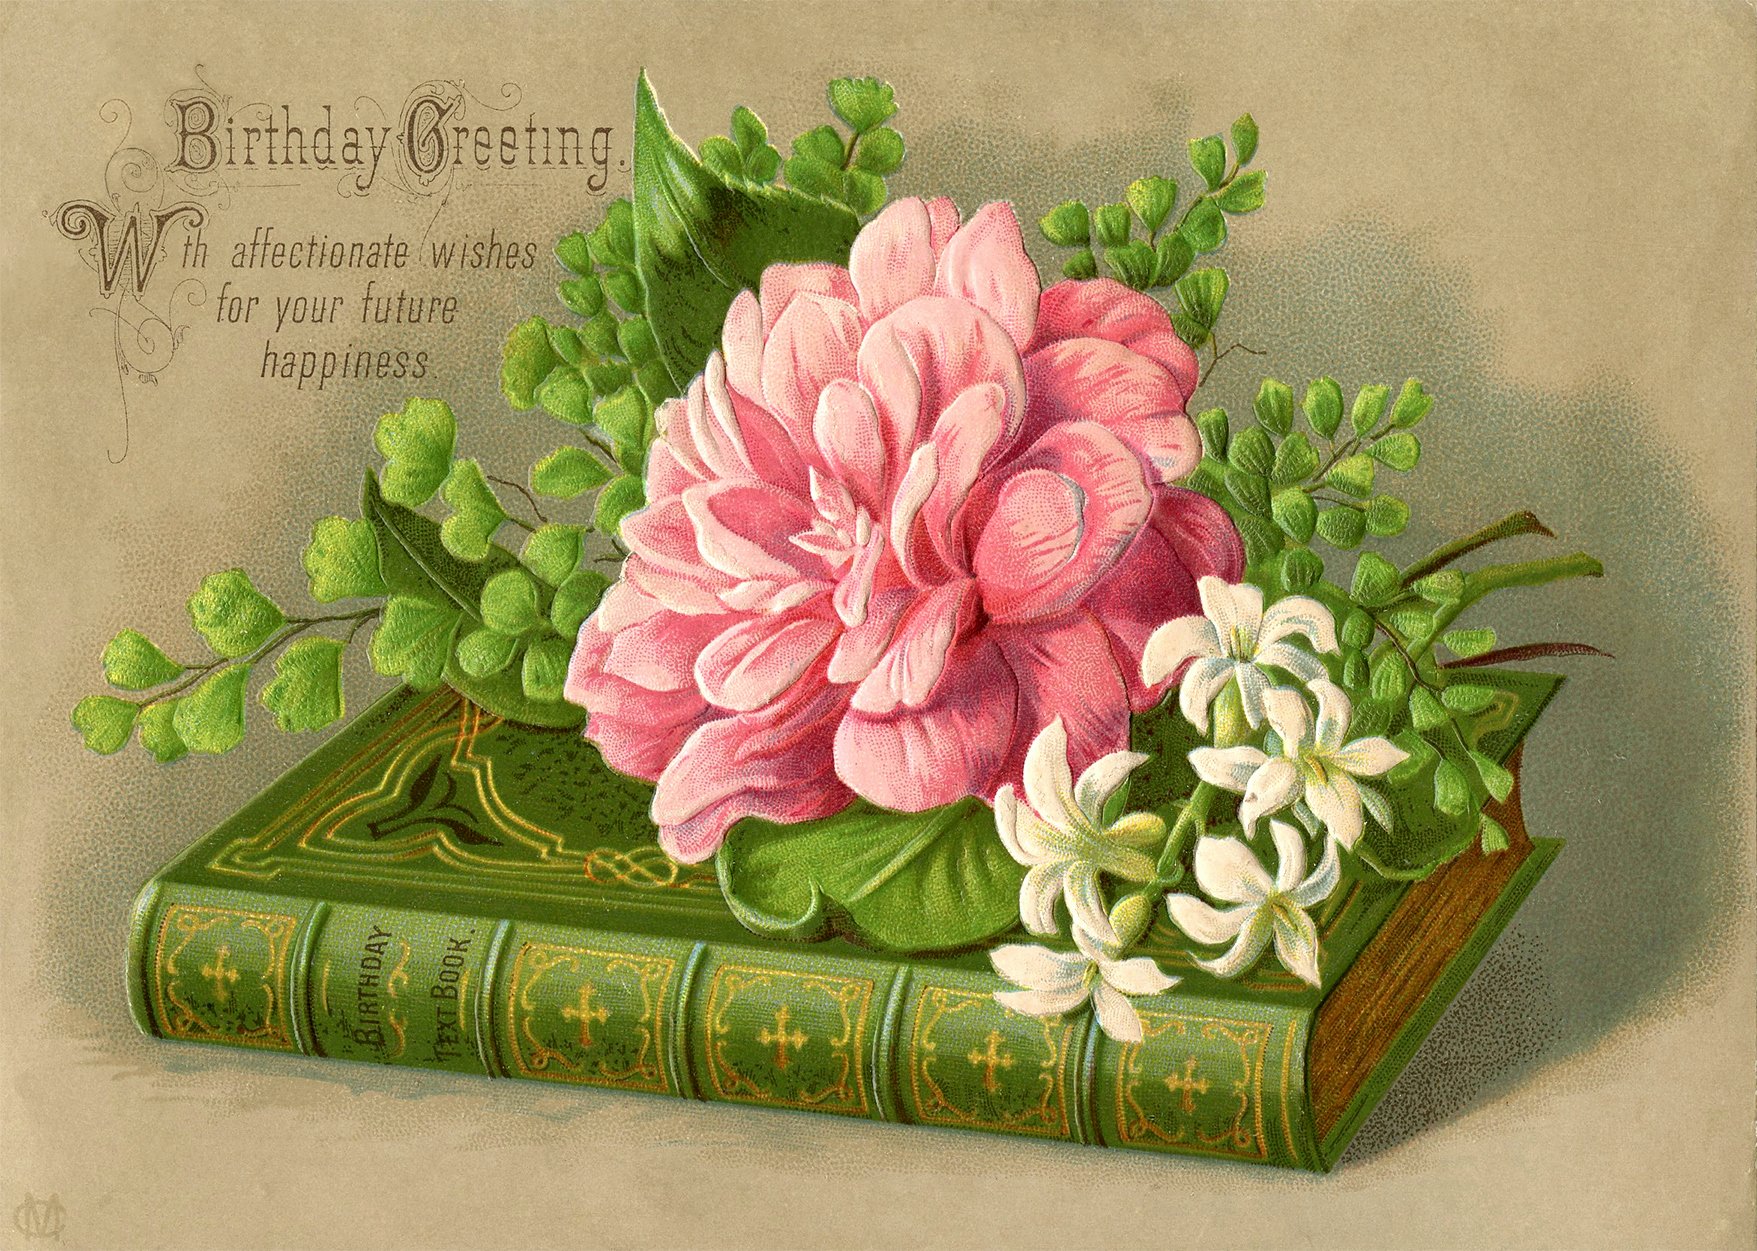 Happy Birthday Pictures Free Elegant Vintage Birthday Image Book Flowers the Graphics Fairy